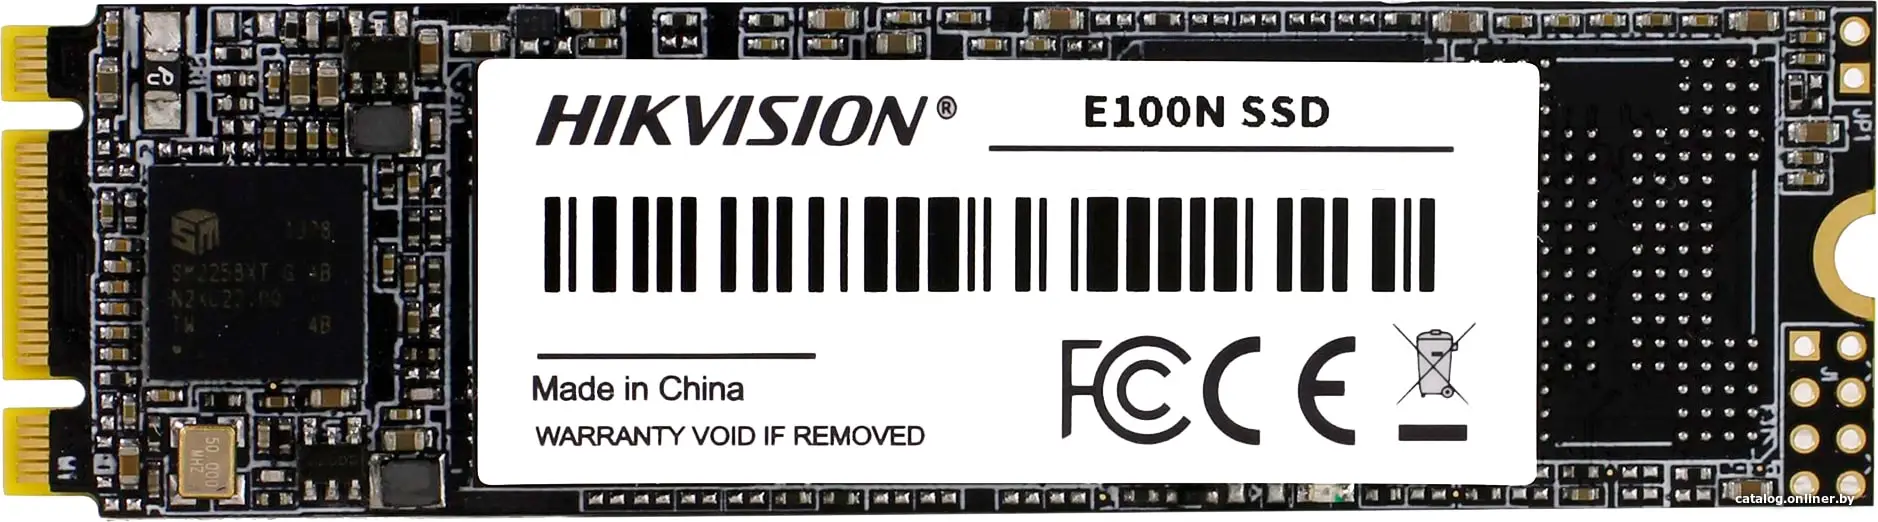 Купить SSD диск Hikvision E100N 256GB (HS-SSD-E100N-256G), цена, опт и розница